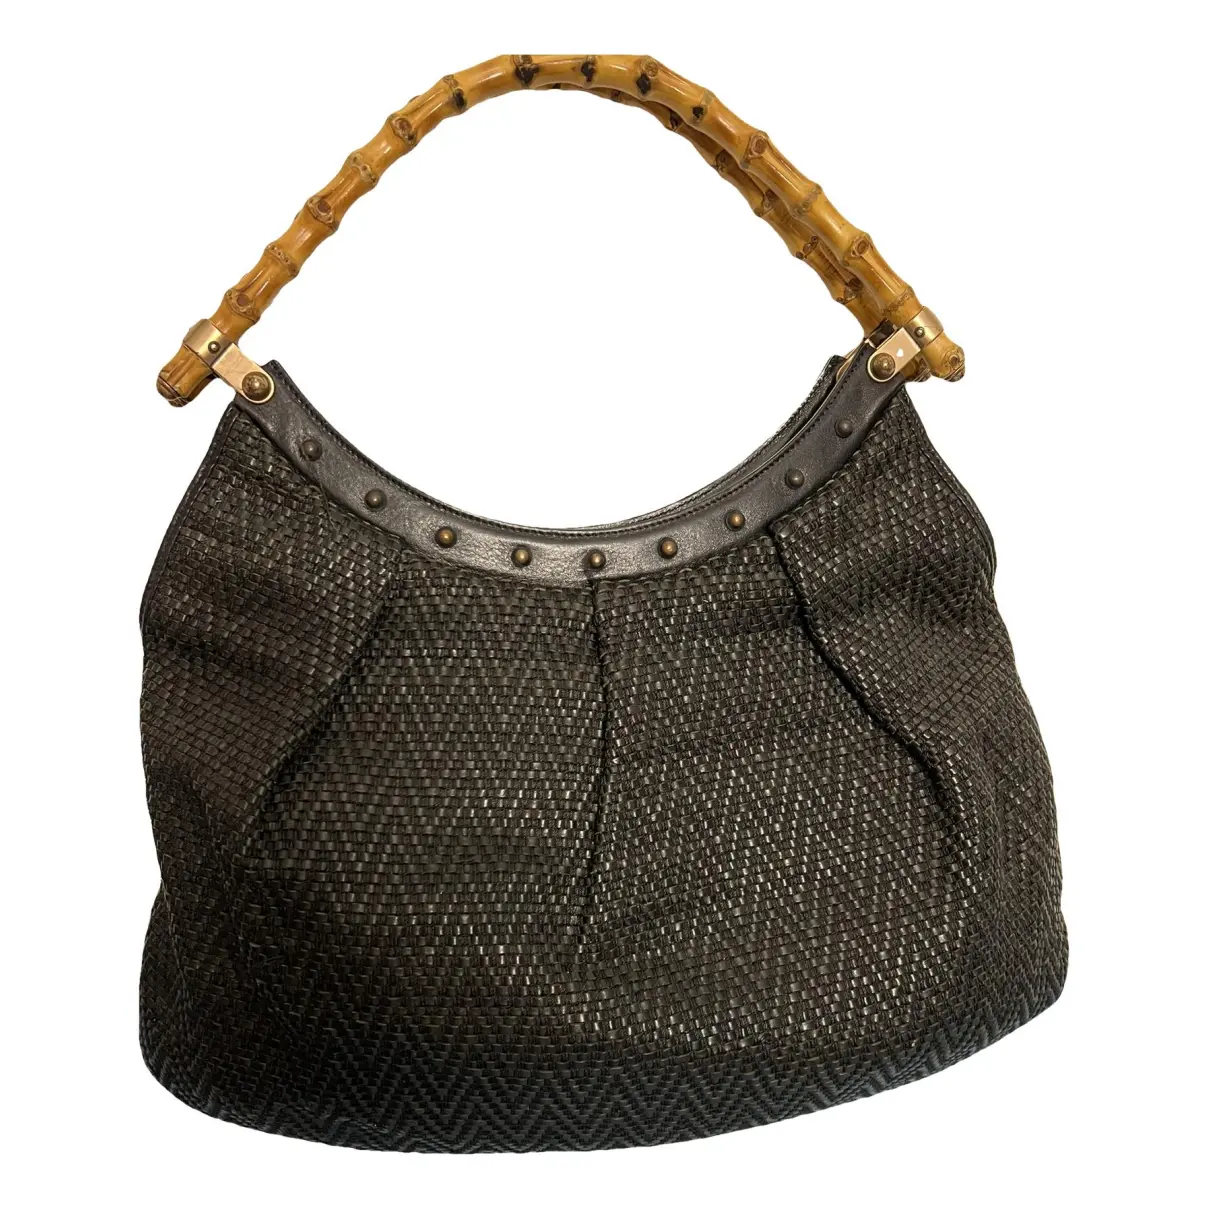 Vintage Bamboo Hobo leather handbag